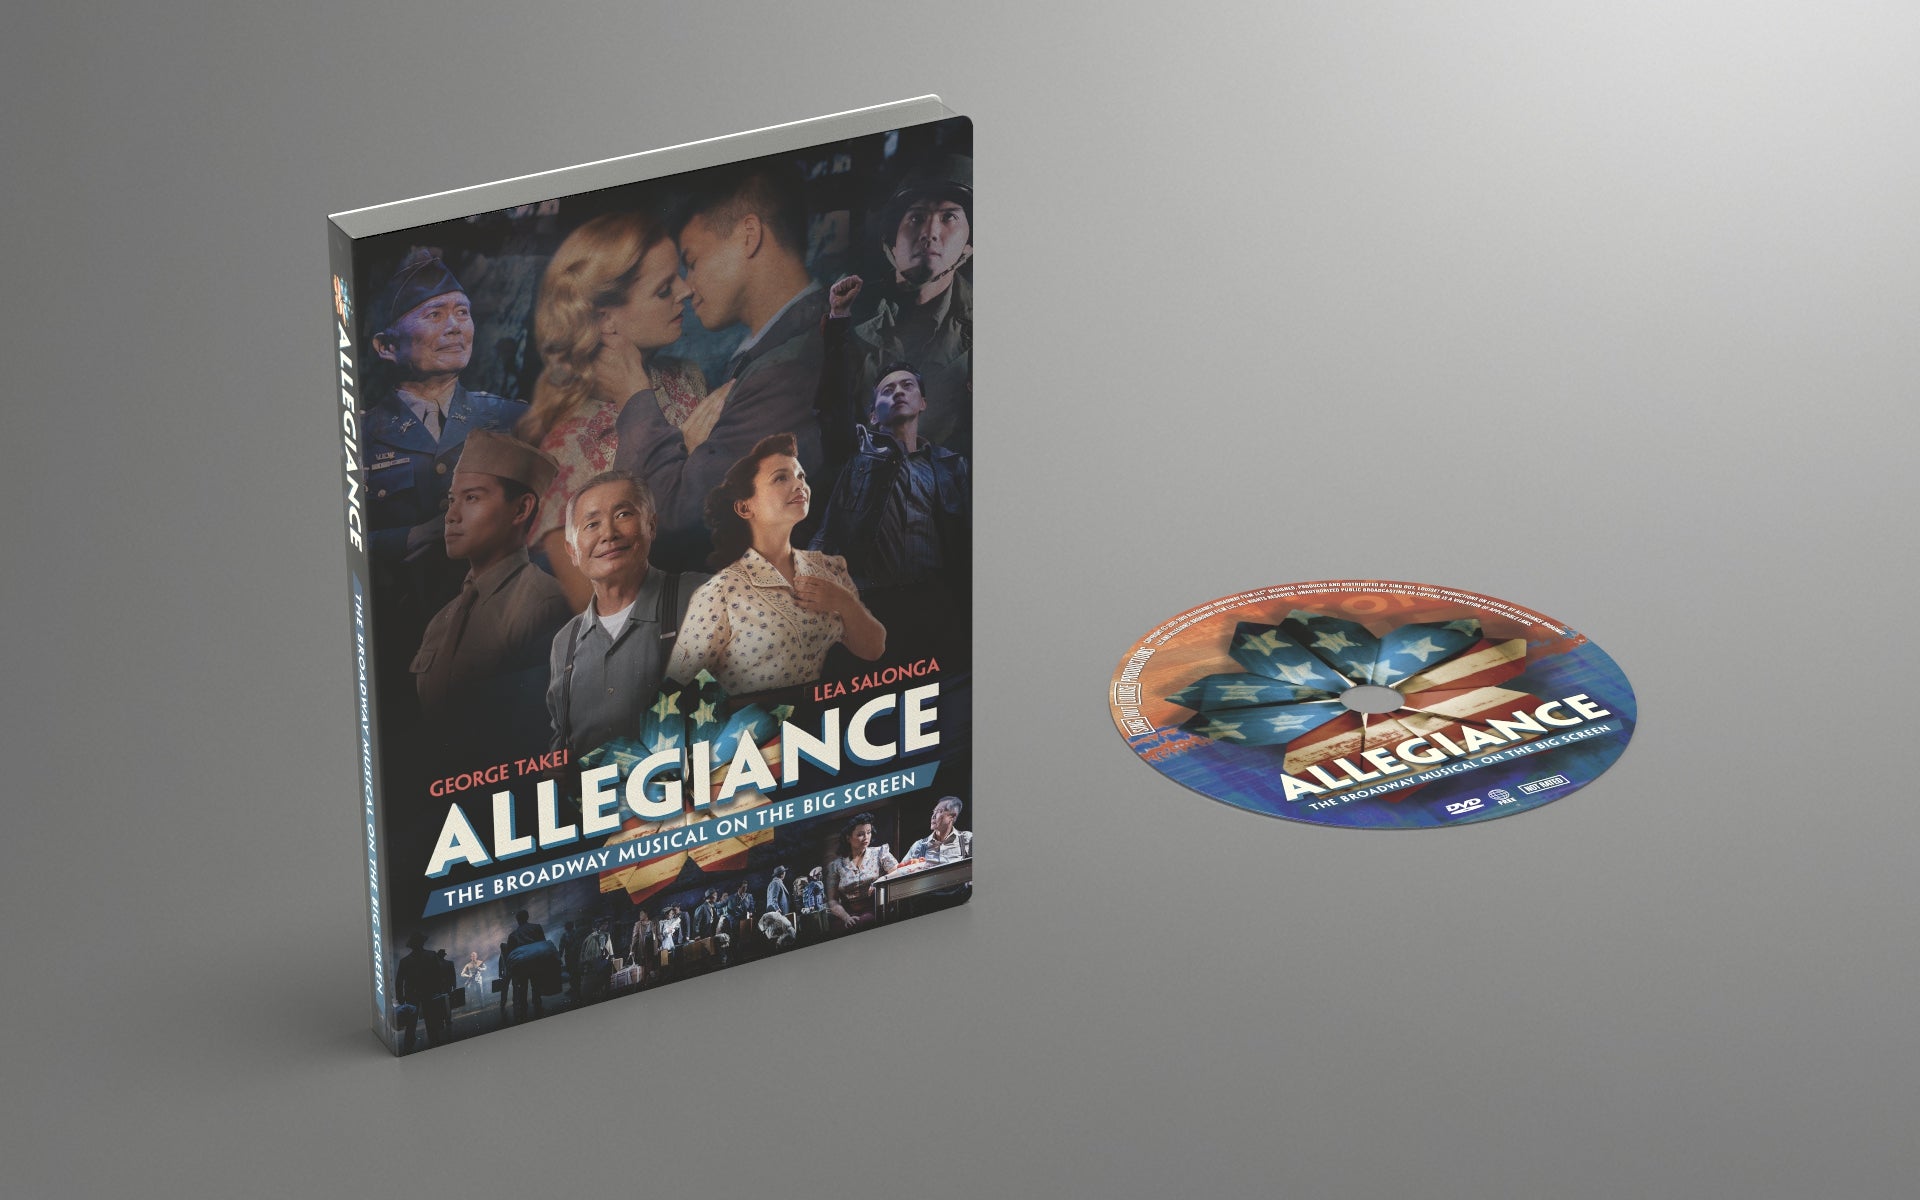 Allegiance - The Broadway Musical on DVD